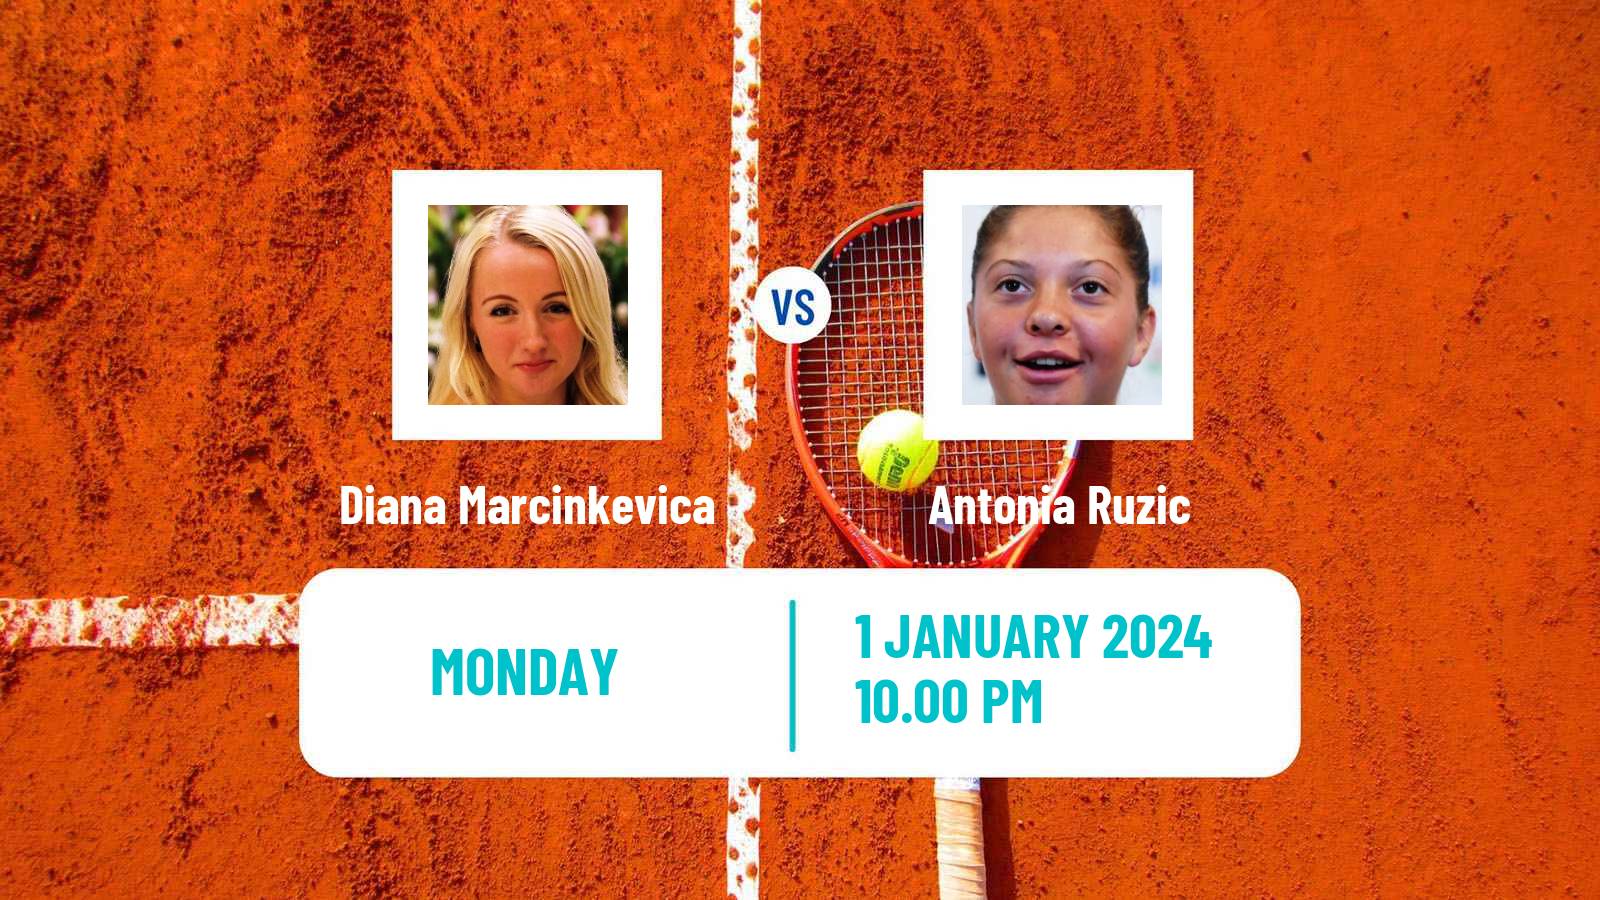 Tennis ITF W50 Nonthaburi Women Diana Marcinkevica - Antonia Ruzic